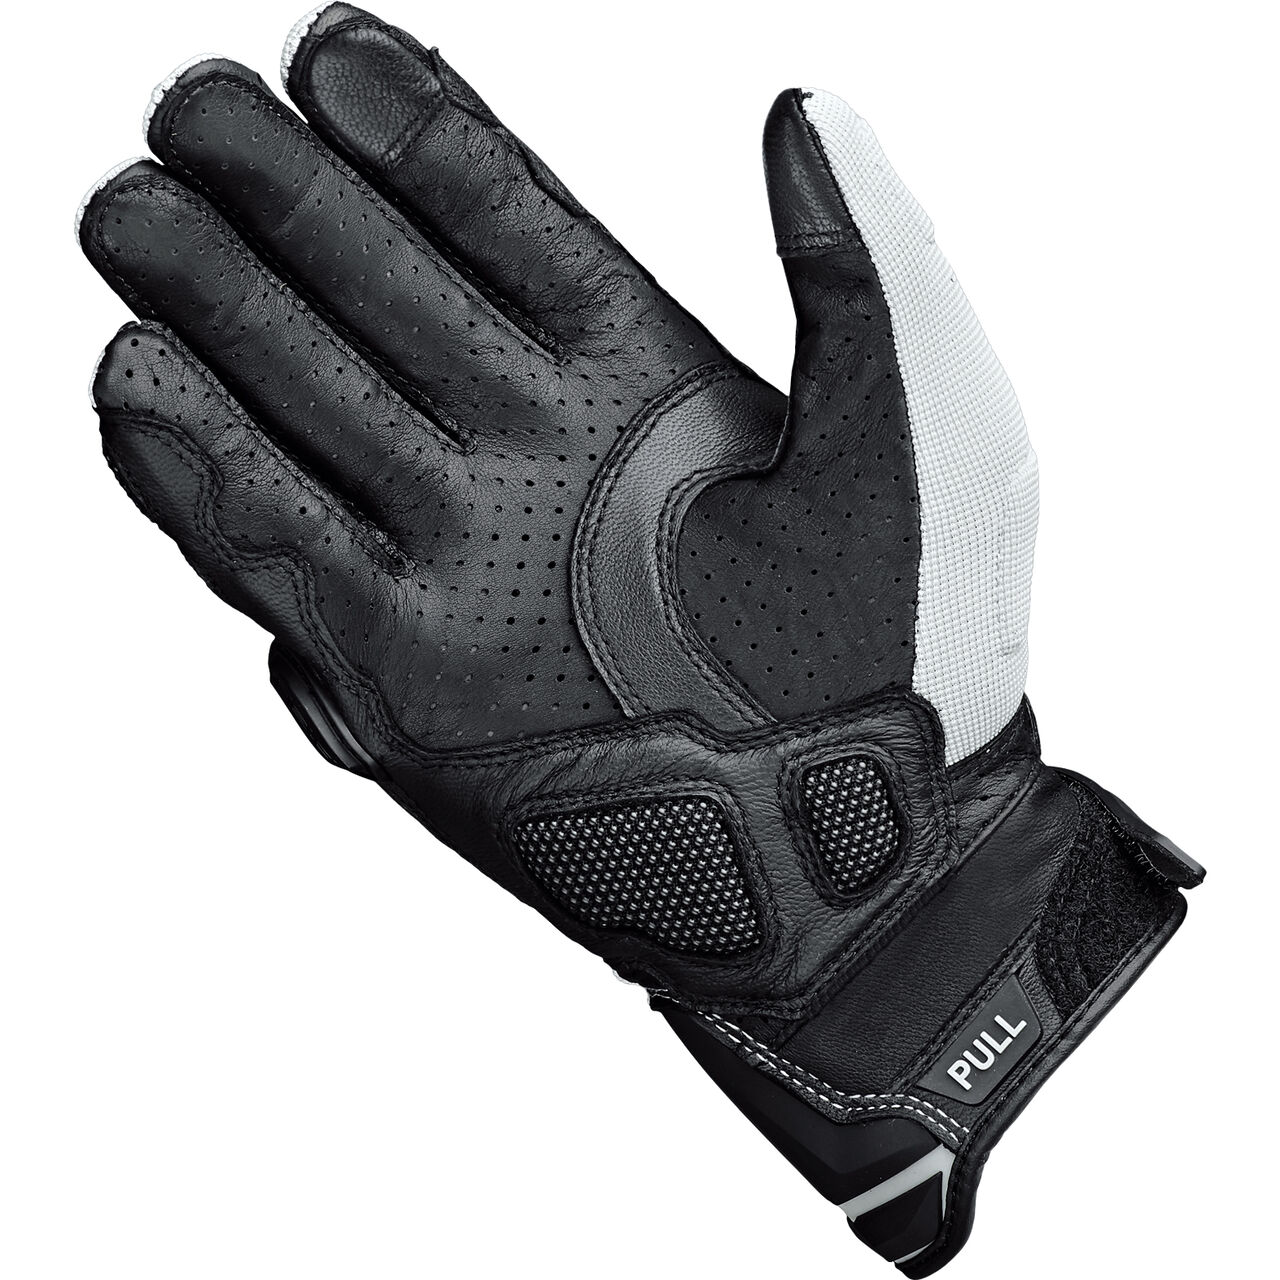 Sambia Pro Cross-/Enduro Handschuh grau/schwarz (lange Finger)